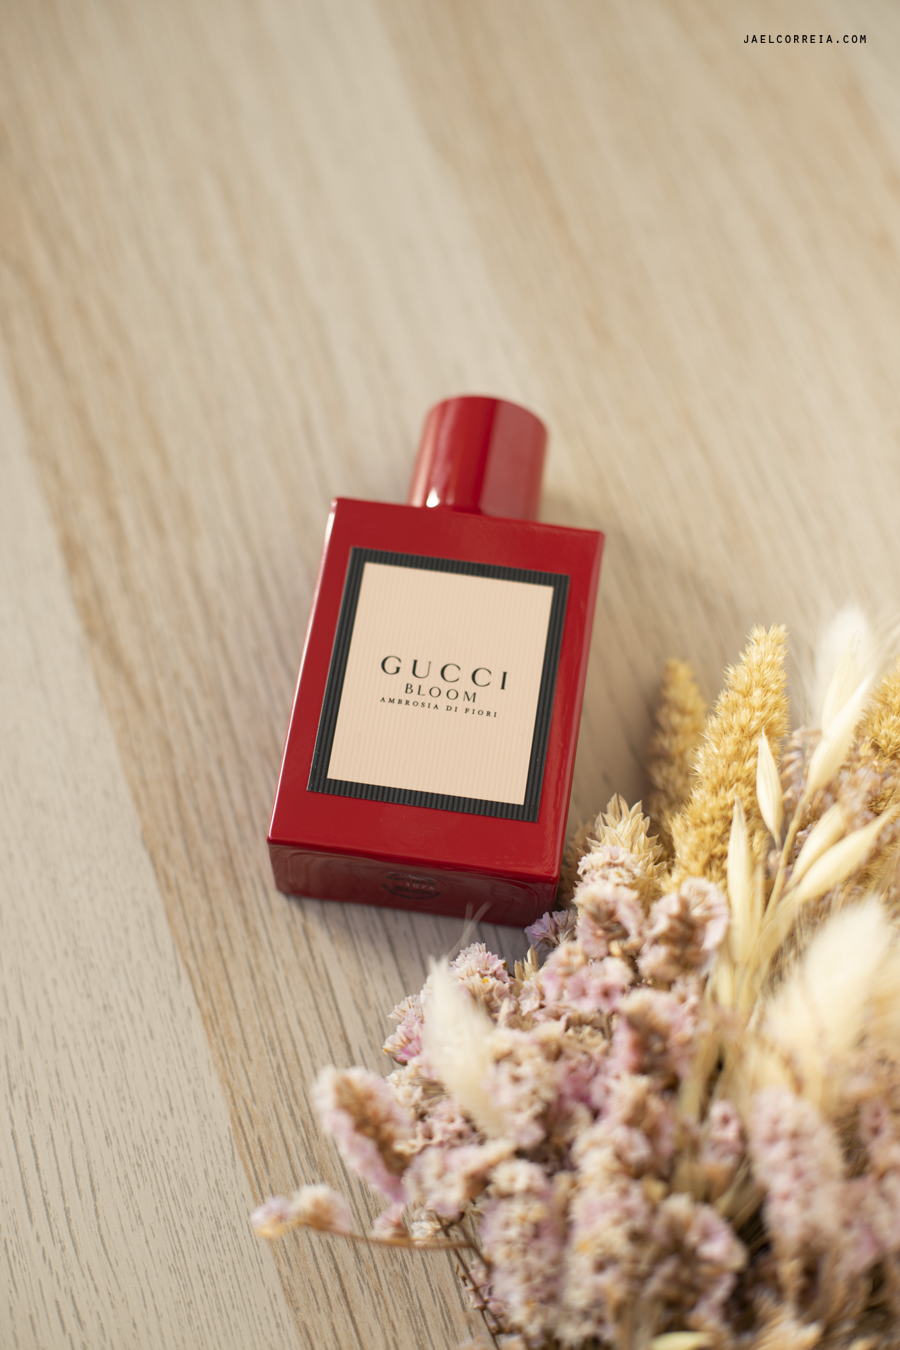 gucci bloom ambrosia di fiori perfume parfum eau de parfum notino online shopping portugal perfumes baratos jael correia review resenha